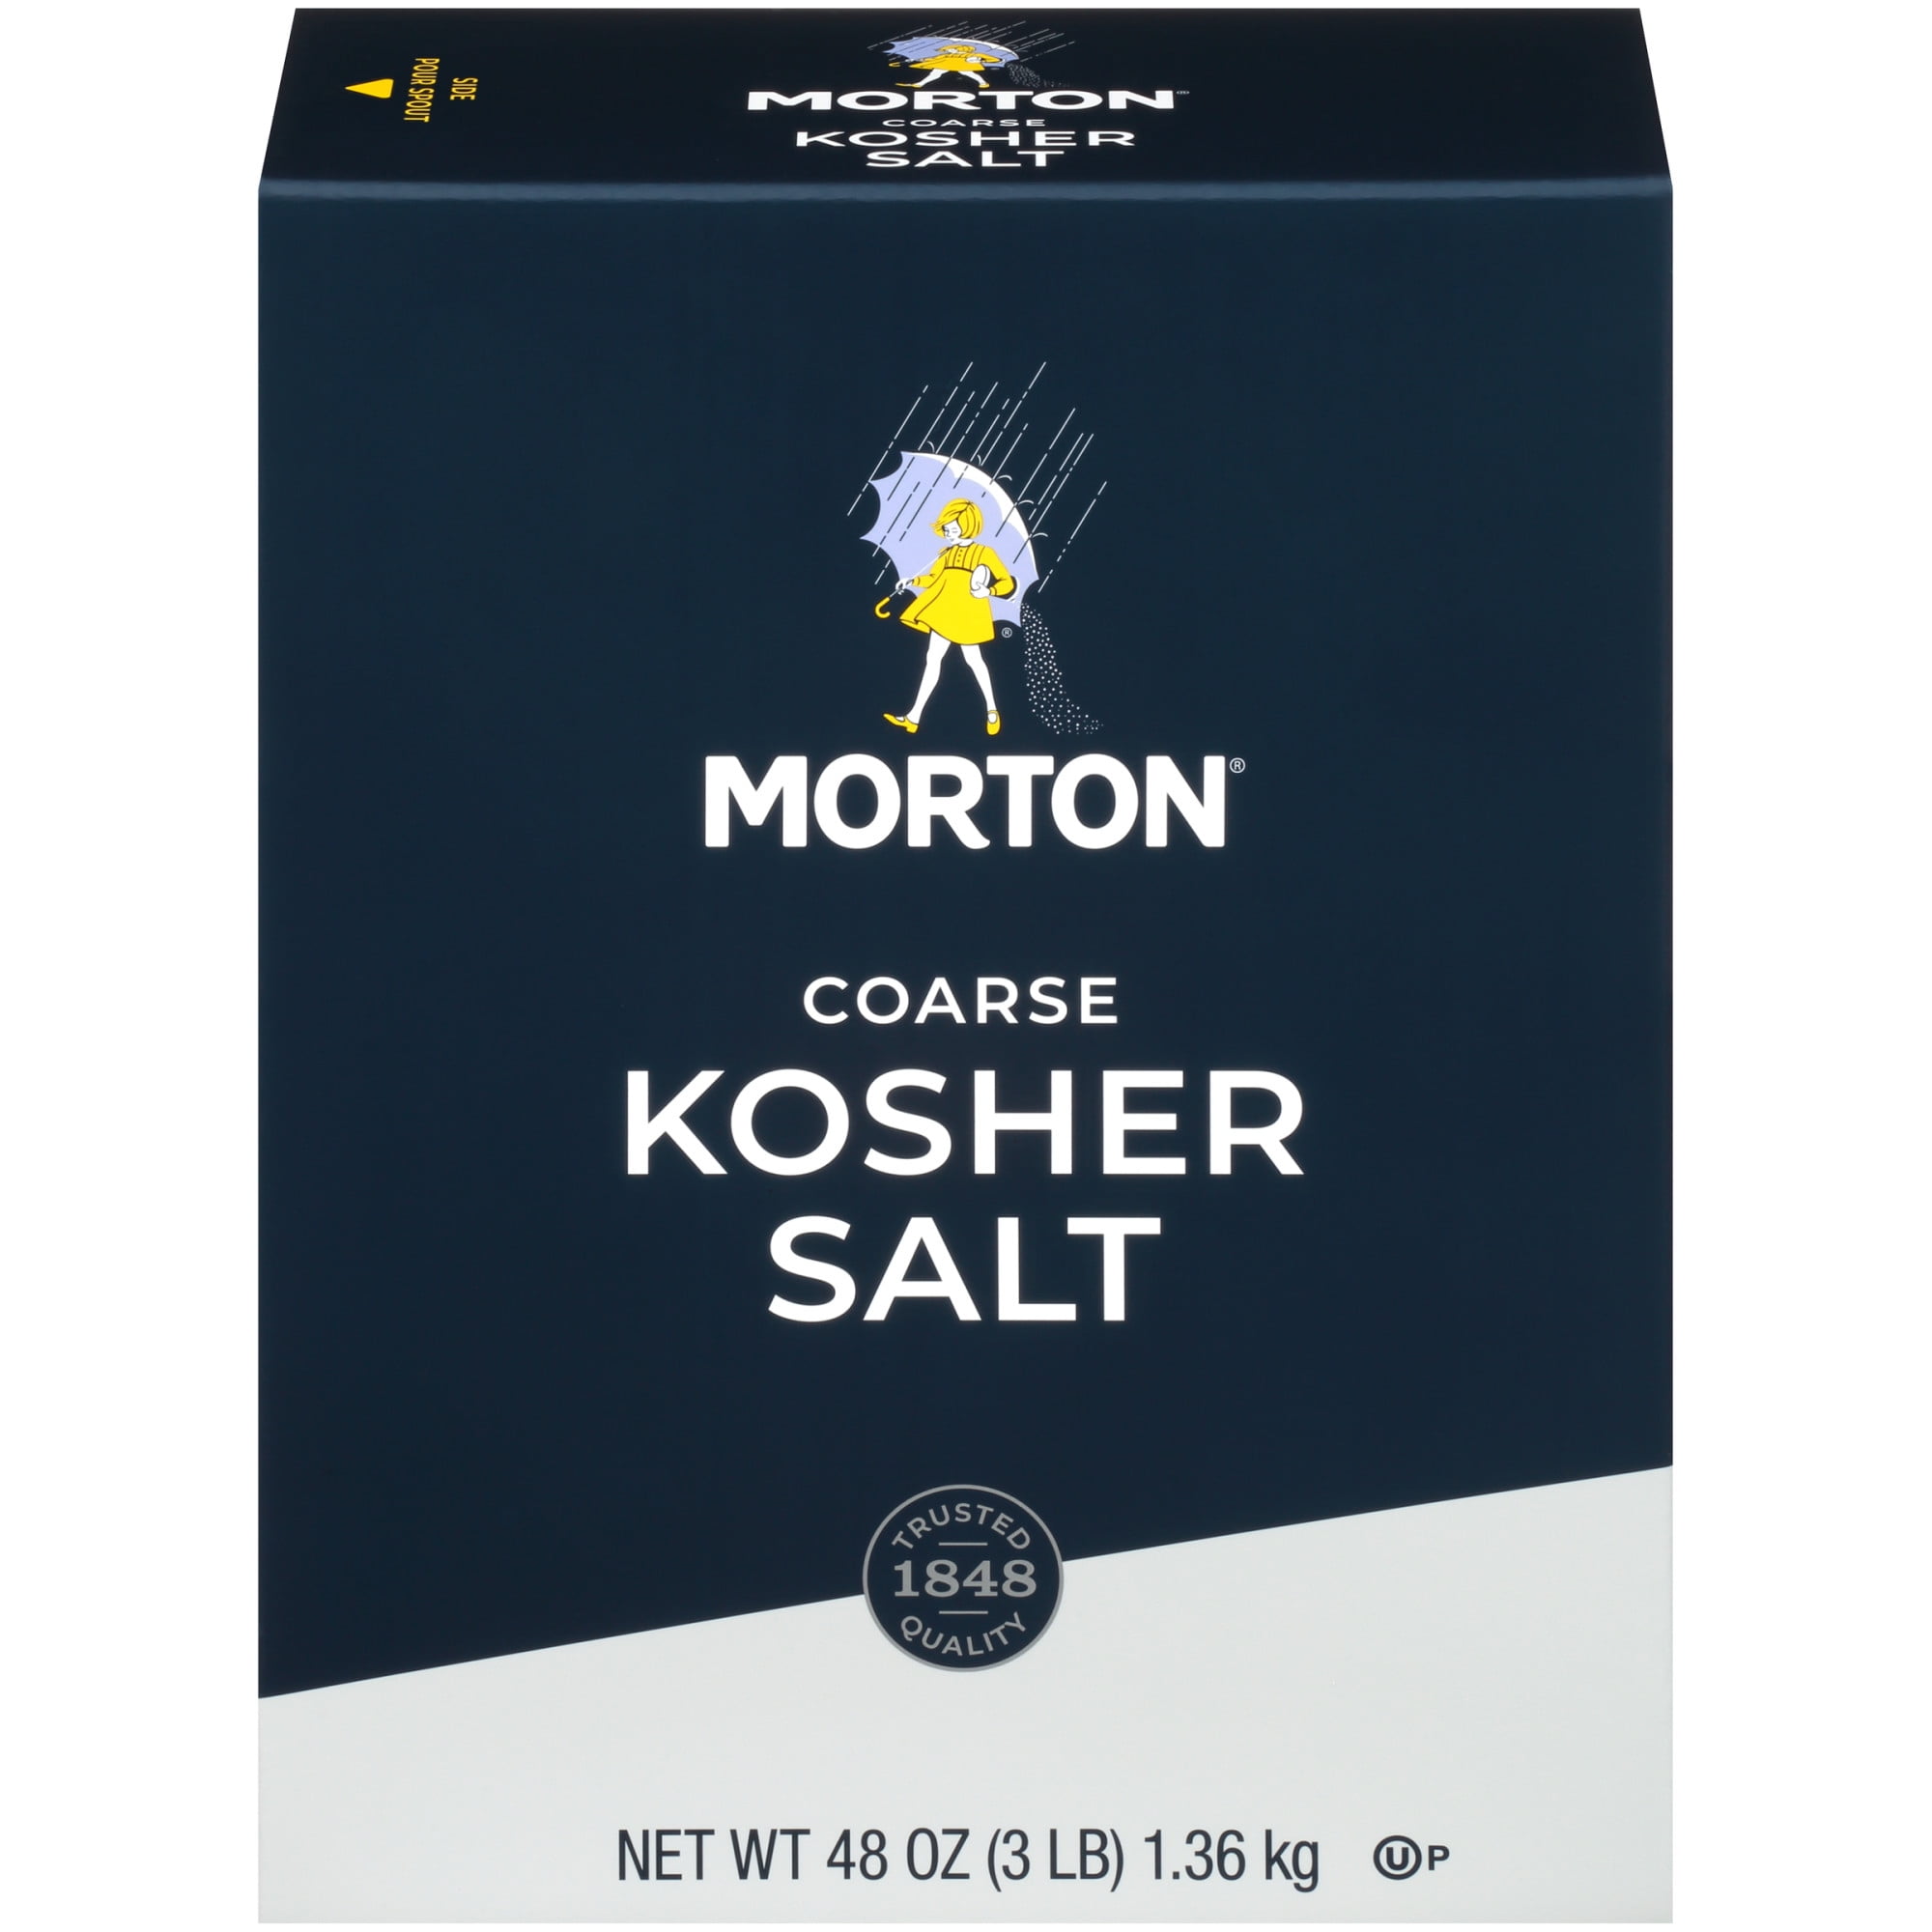 Morton Coarse Kosher Salt   For Everyday Cooking, Grilling, Brining, and as a Margarita Salt Rimmer, 3 LB Box